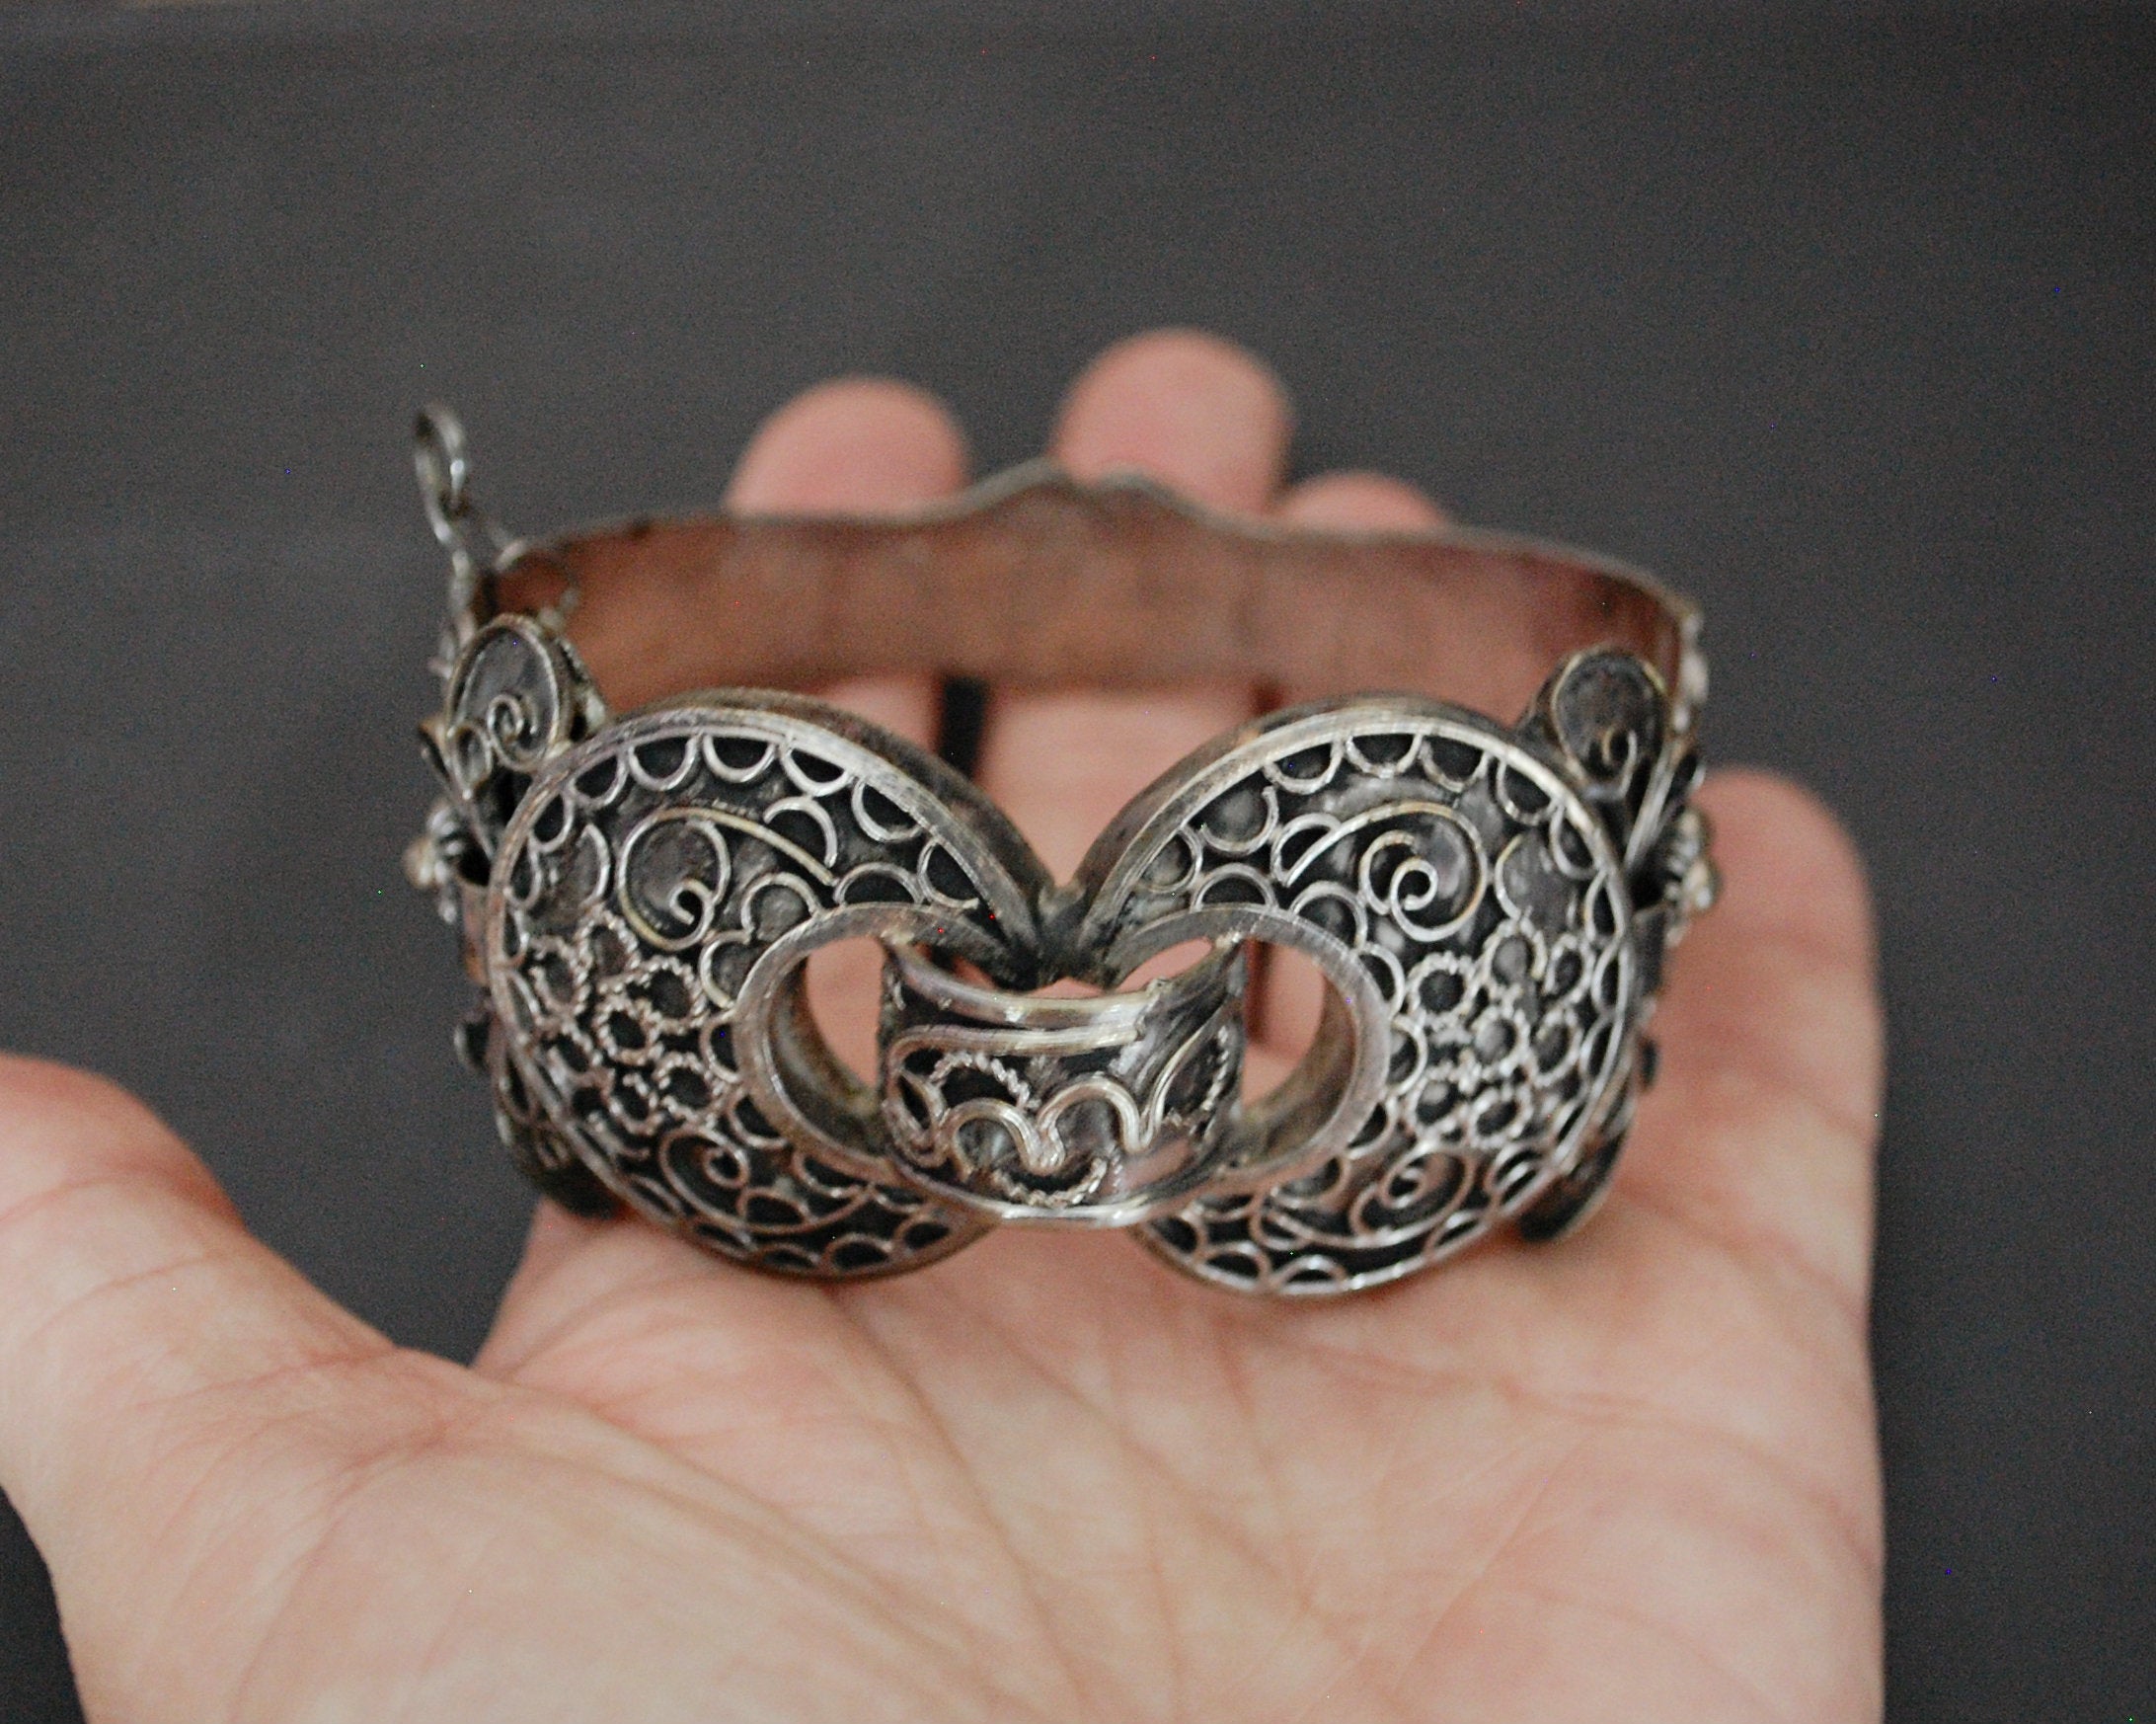 Tunisian Hinged Silver Bracelet